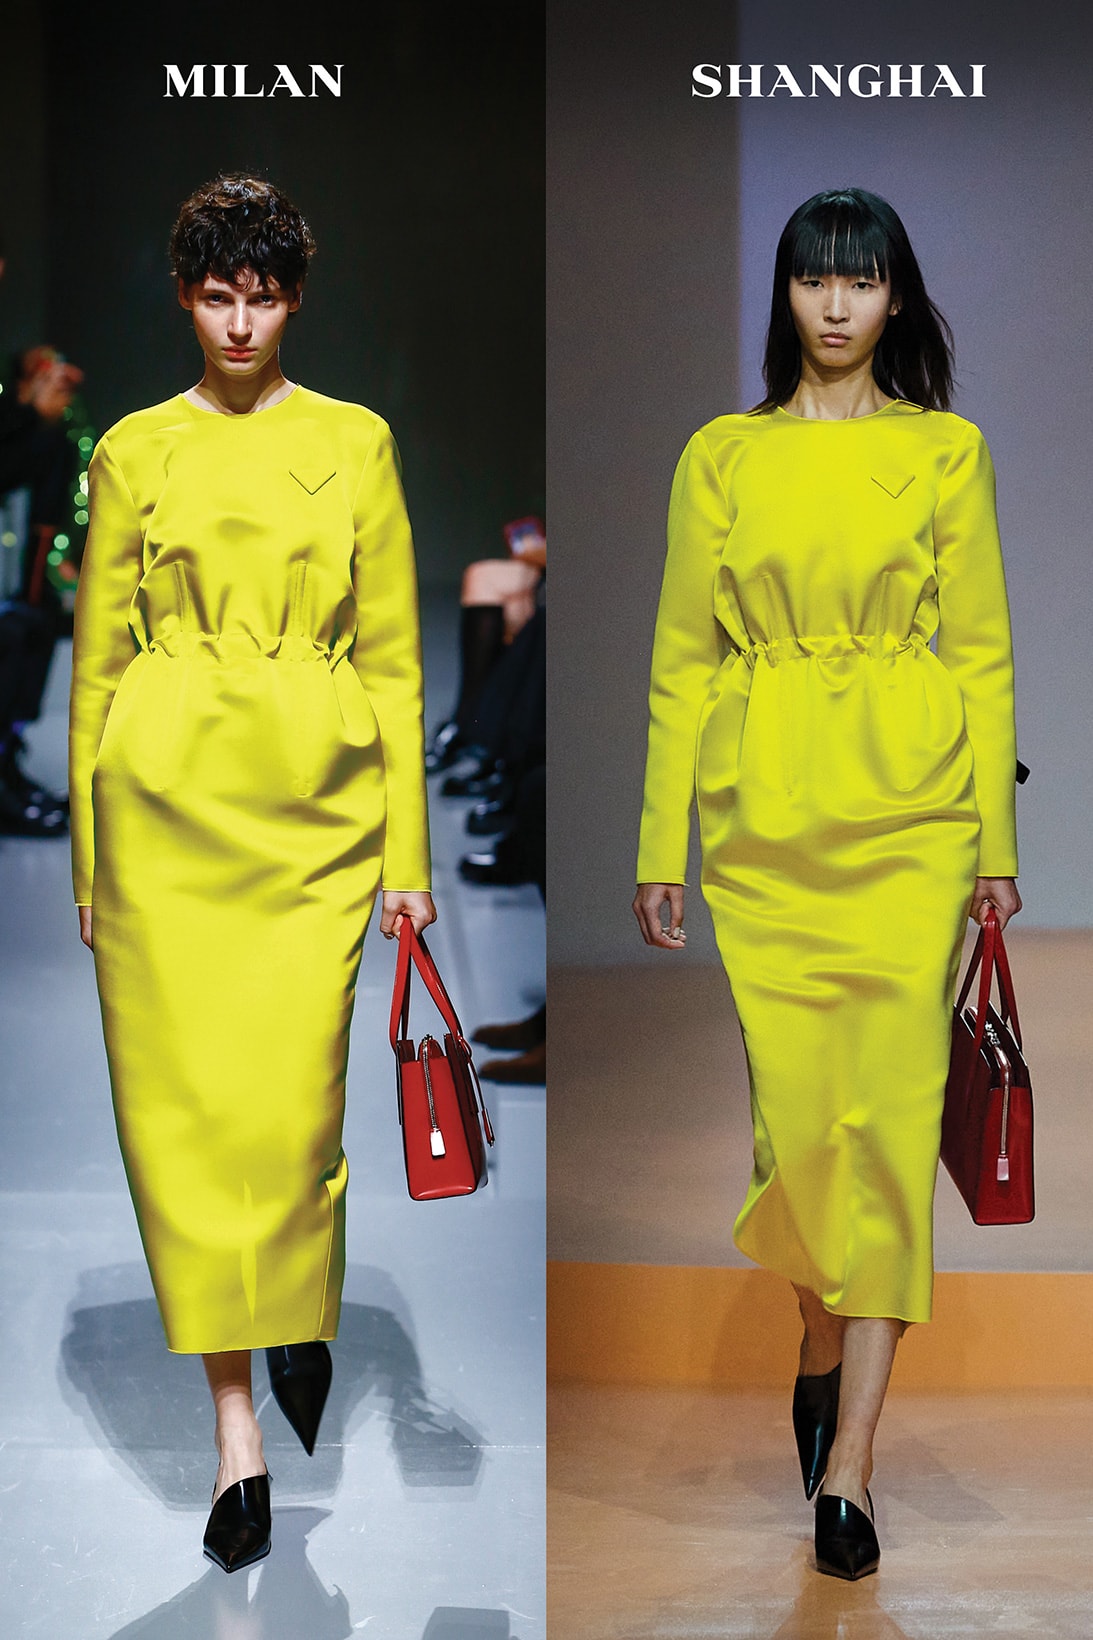 Prada Spring Summer 2022 SS22 Collection Milan Shanghai Fashion Week Runway Raf Simons Miuccia